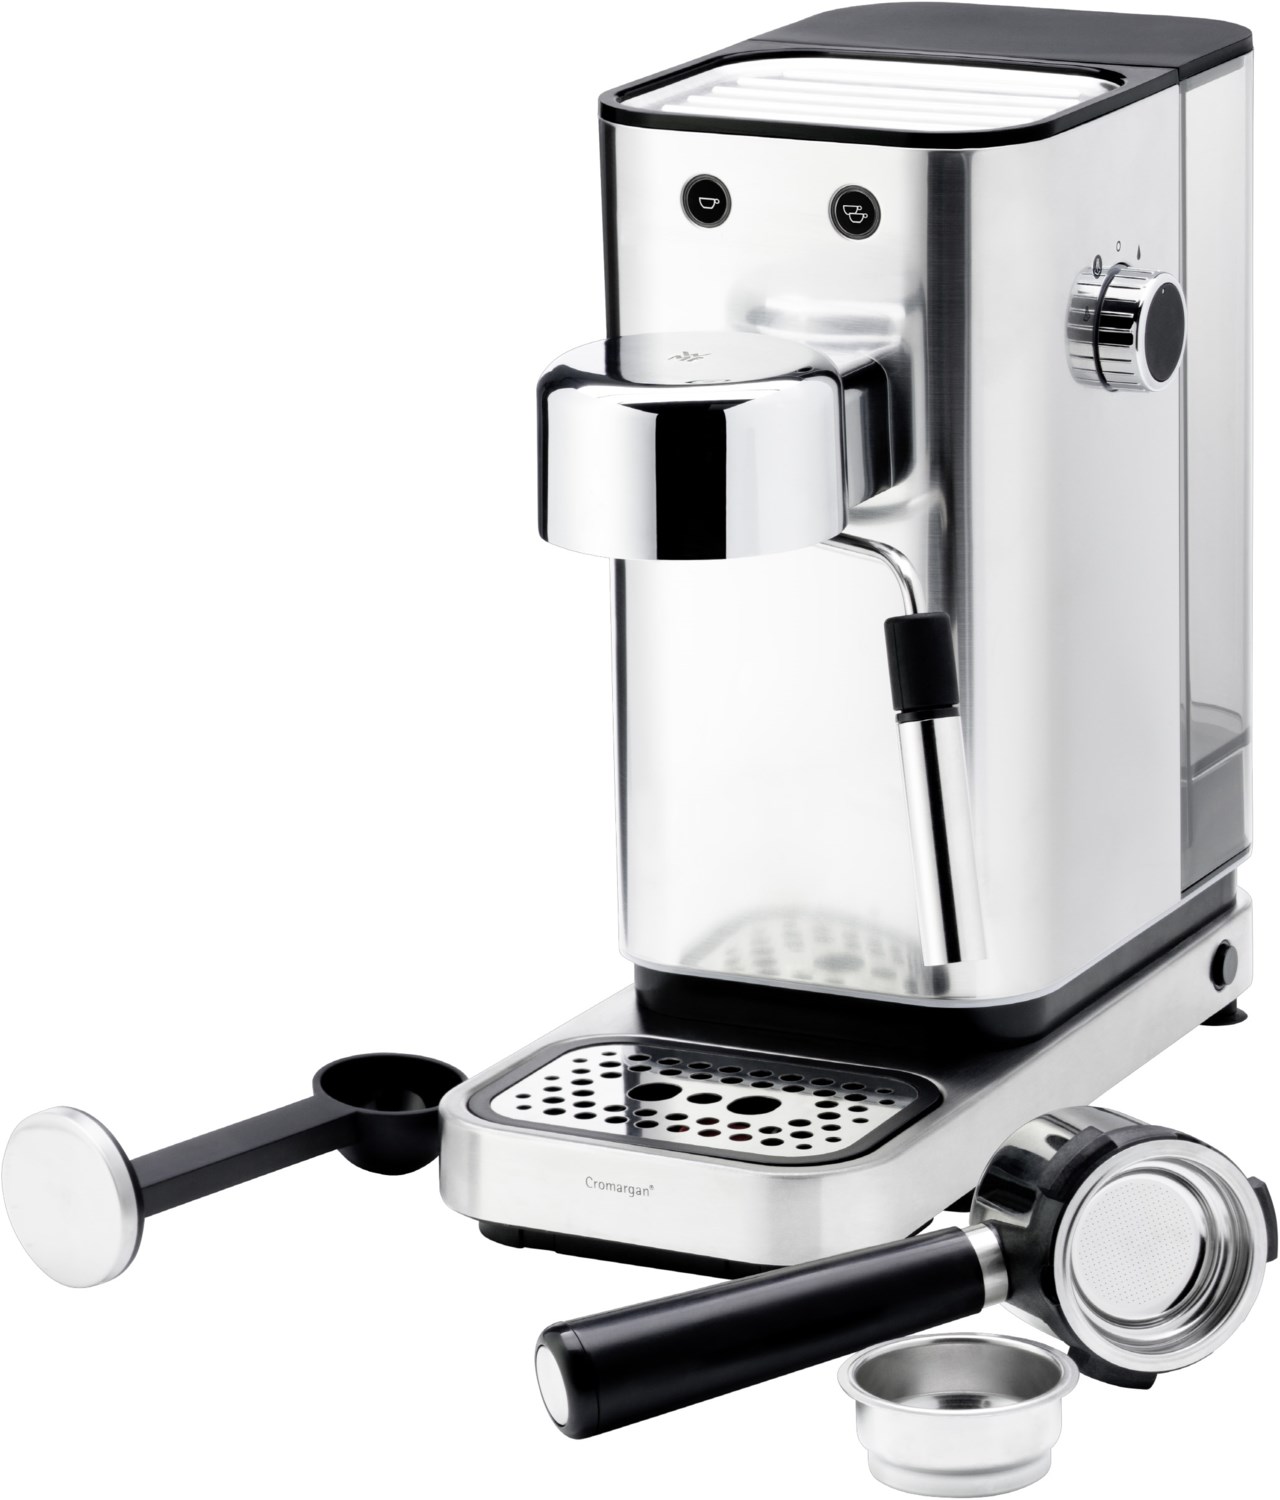 Kaffeevollautomat vs Kaffeehalbautomat. Was ist der Unterschied?